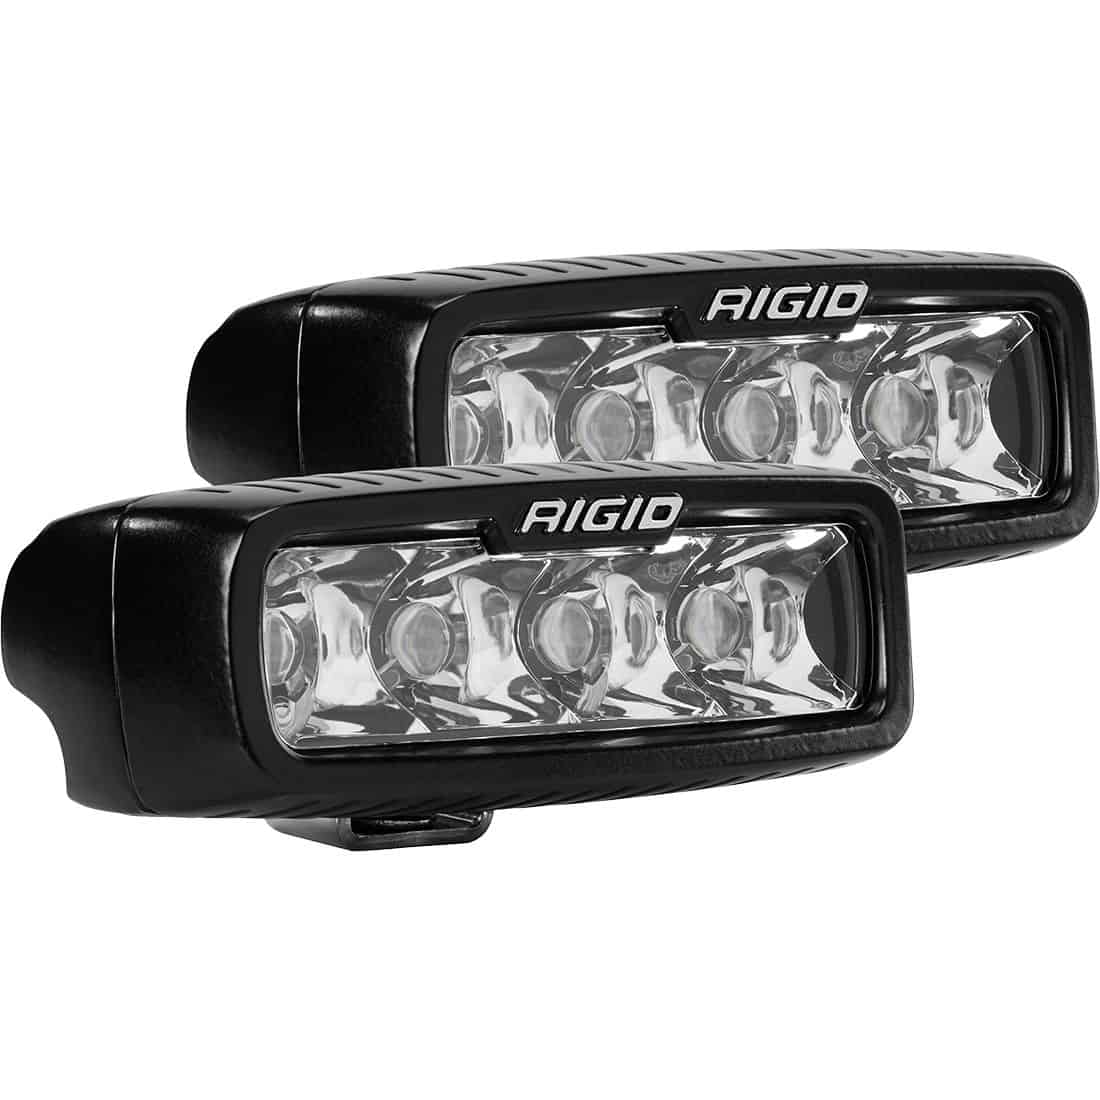 Spot E-Mark Compliant SR-Q Pro RIGID Lighting 90521EM